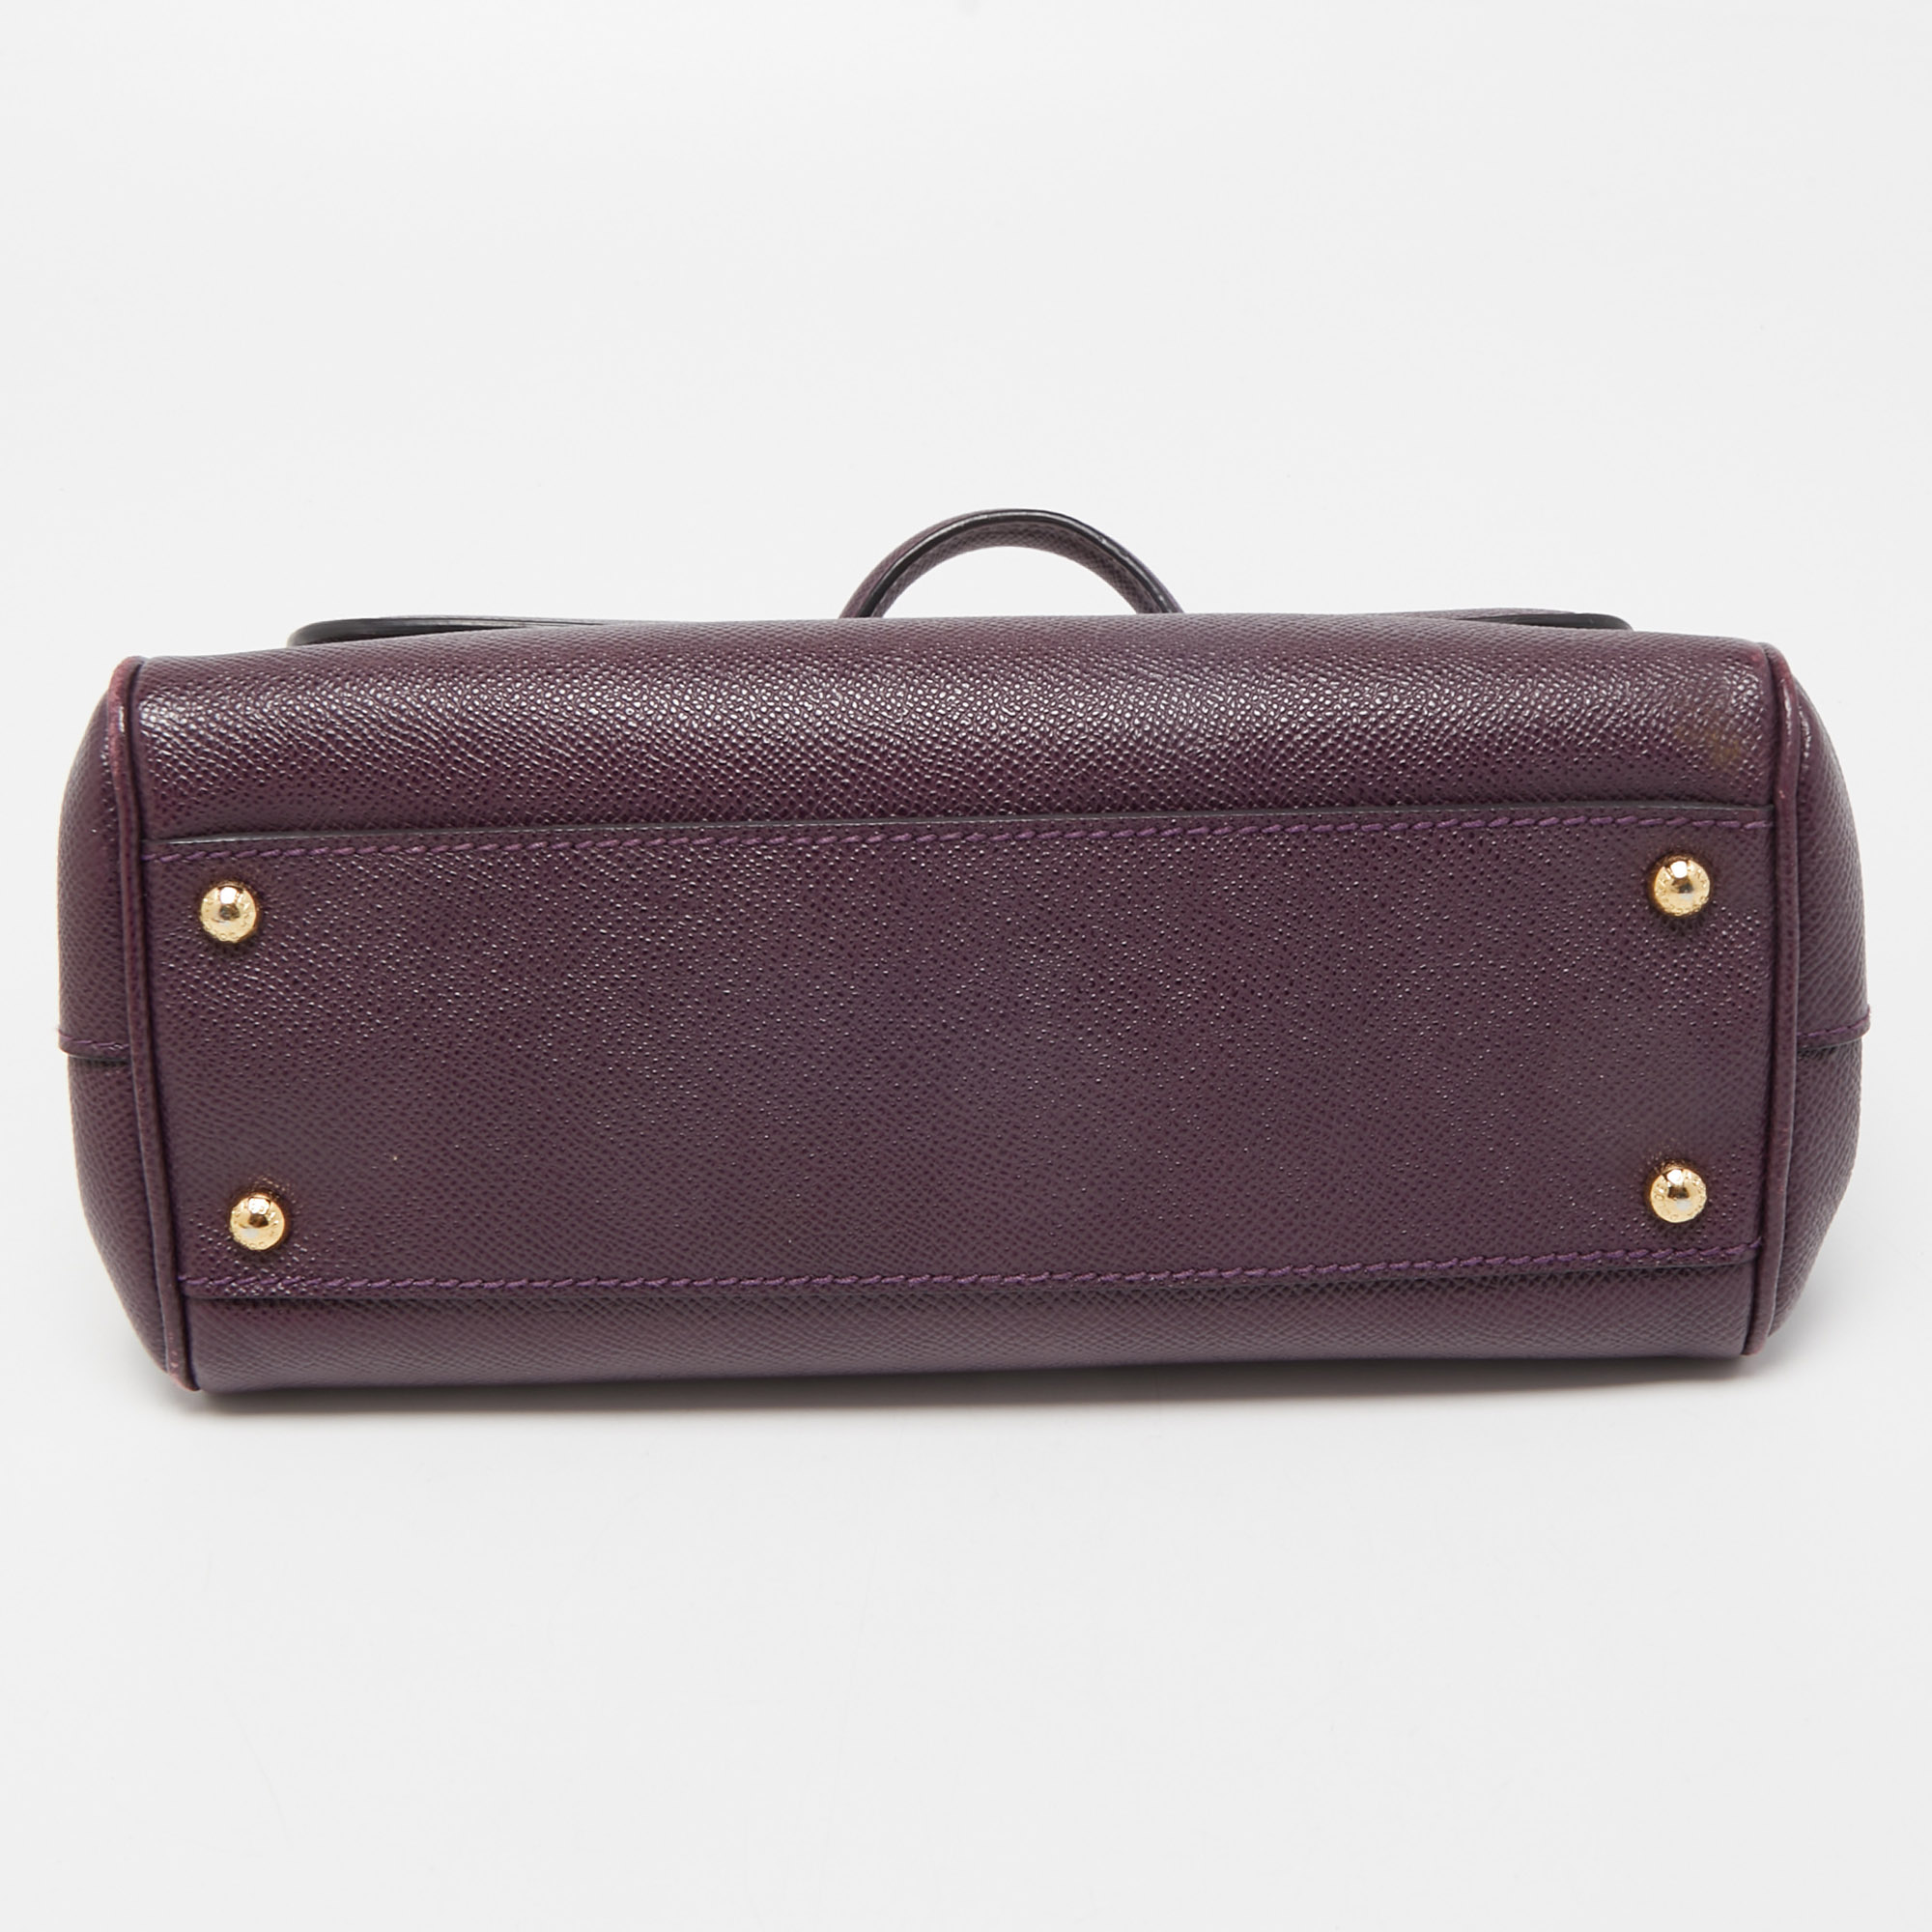 Dolce & Gabbana Purple Leather Medium Miss Sicily Top Handle Bag